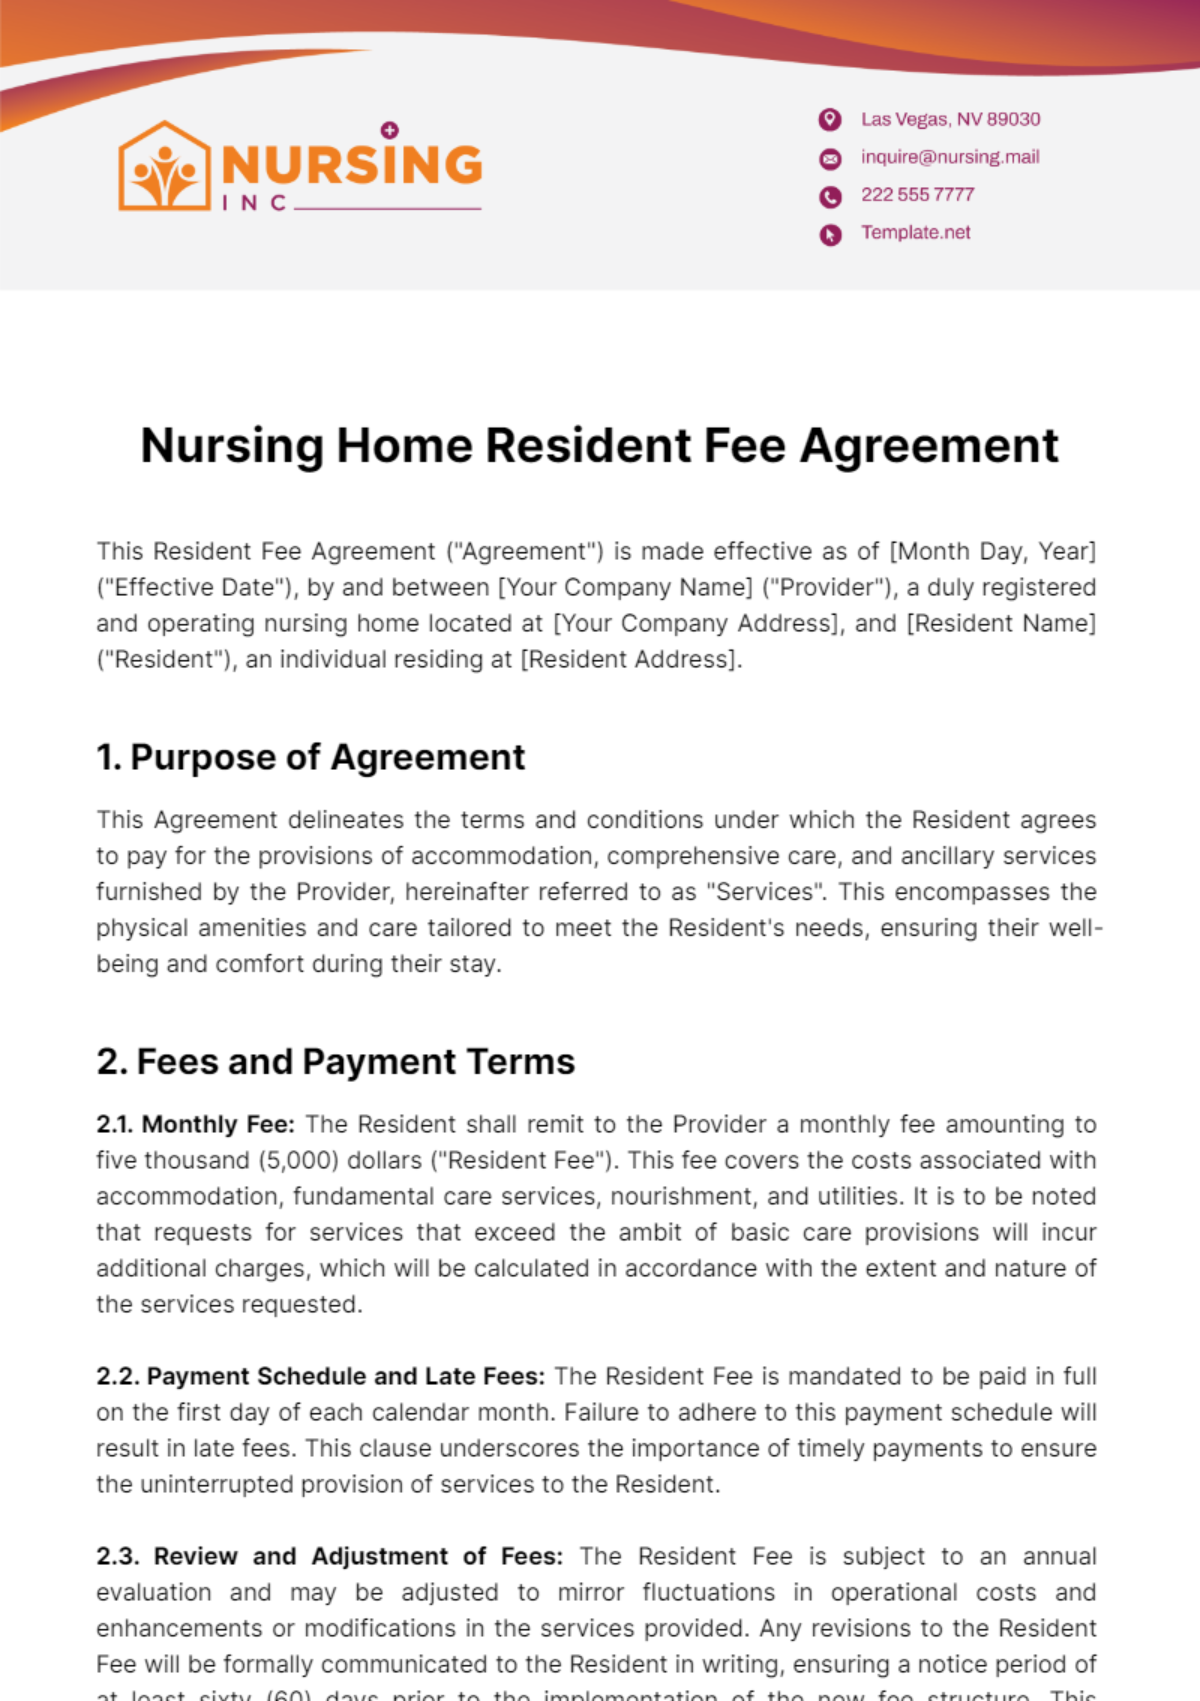 Nursing Home Resident Fee Agreement Template